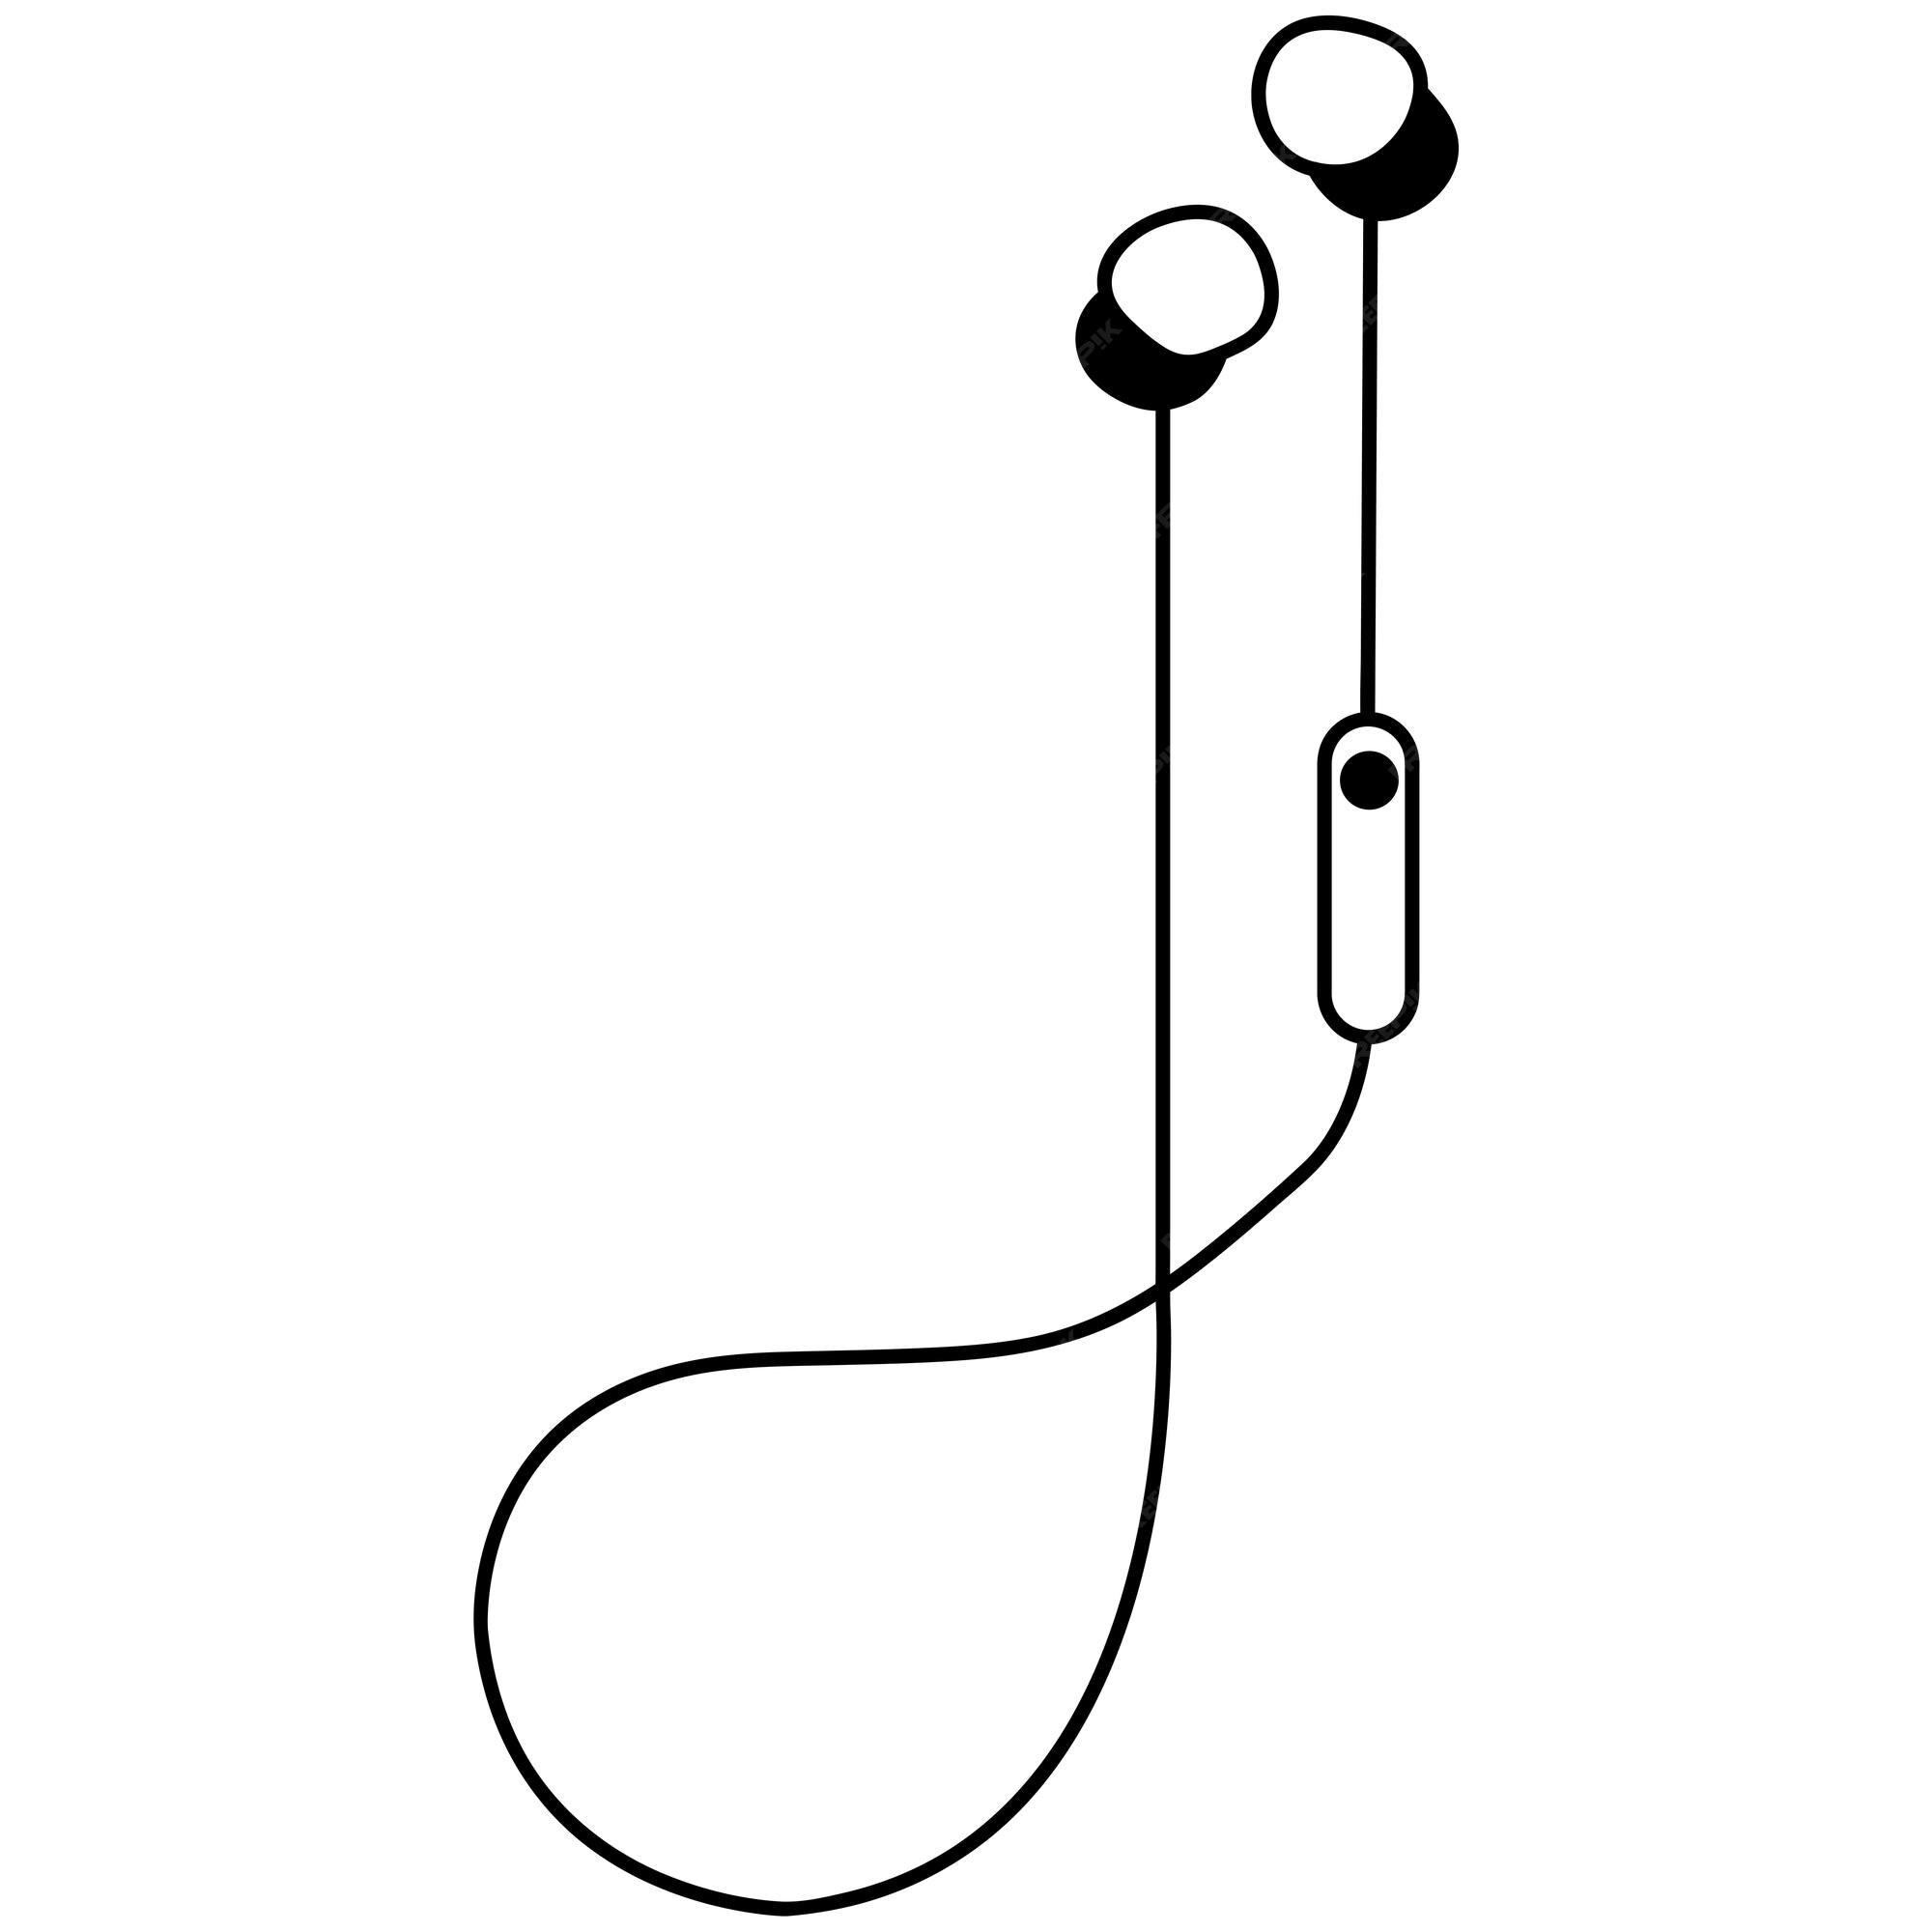 Auriculares para teléfono móvil con cable bluetooth en forma de cabeza.  recurso gráfico. icono. tecnología. negro